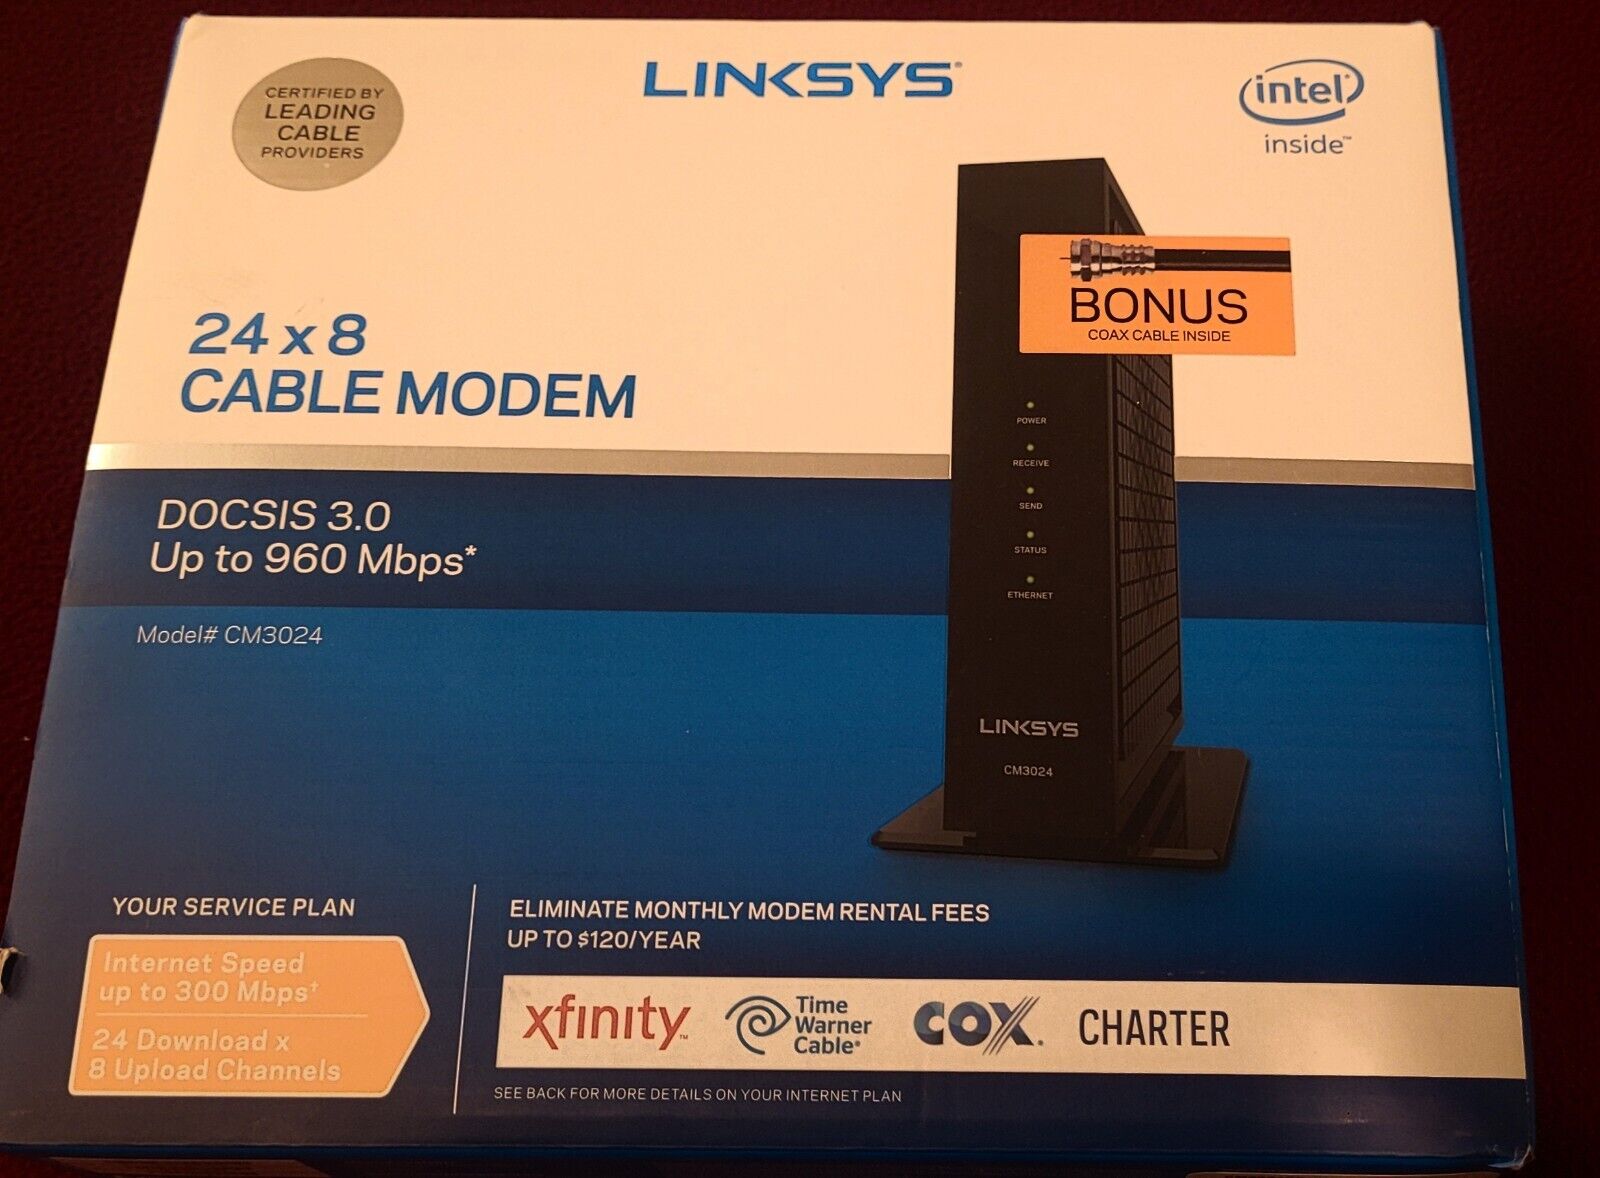 Linksys 24x8 ‎Cable Modem CM3024 Intel Inside 960 Mbps Bonus Coax Cable NEW